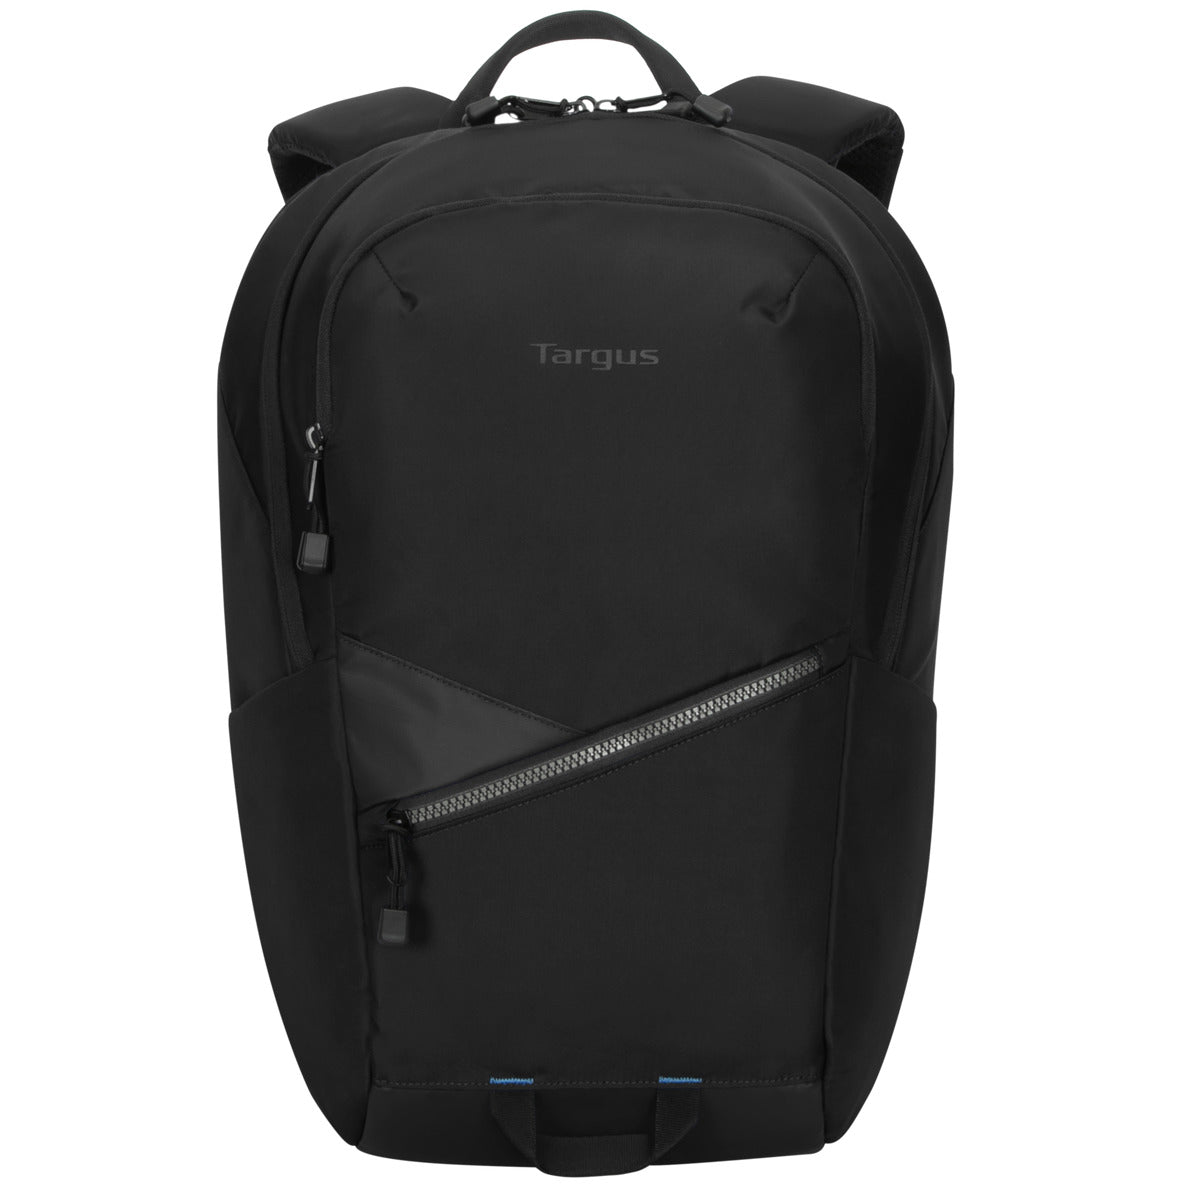 Targus (Black) | Intellect Advanced Laptop Backpack 15.6-inch